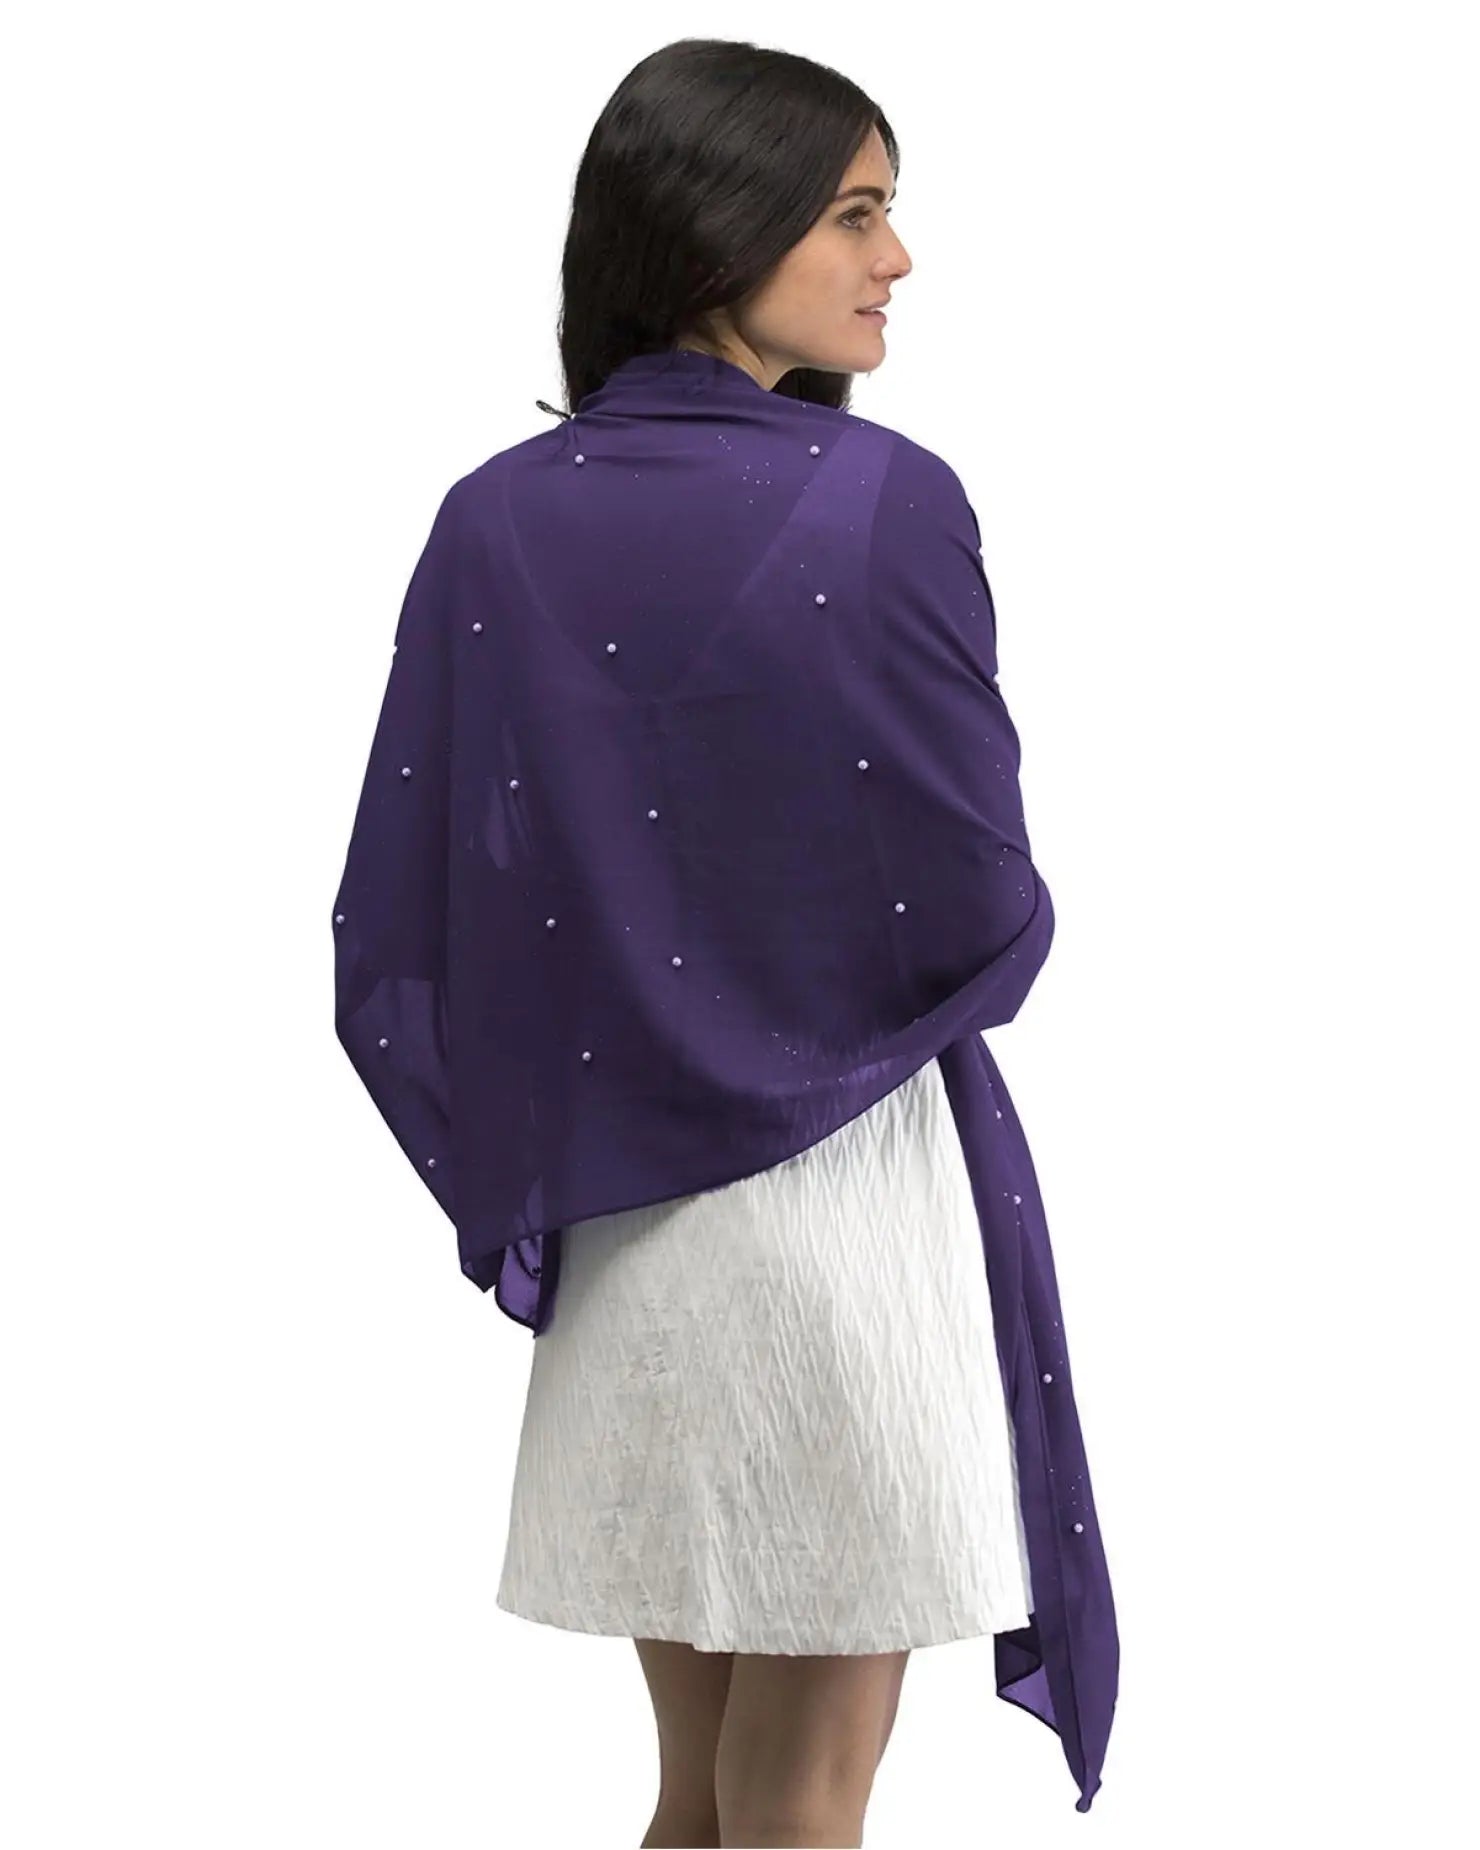 Woman wearing pearl-embellished chiffon shawl in purple